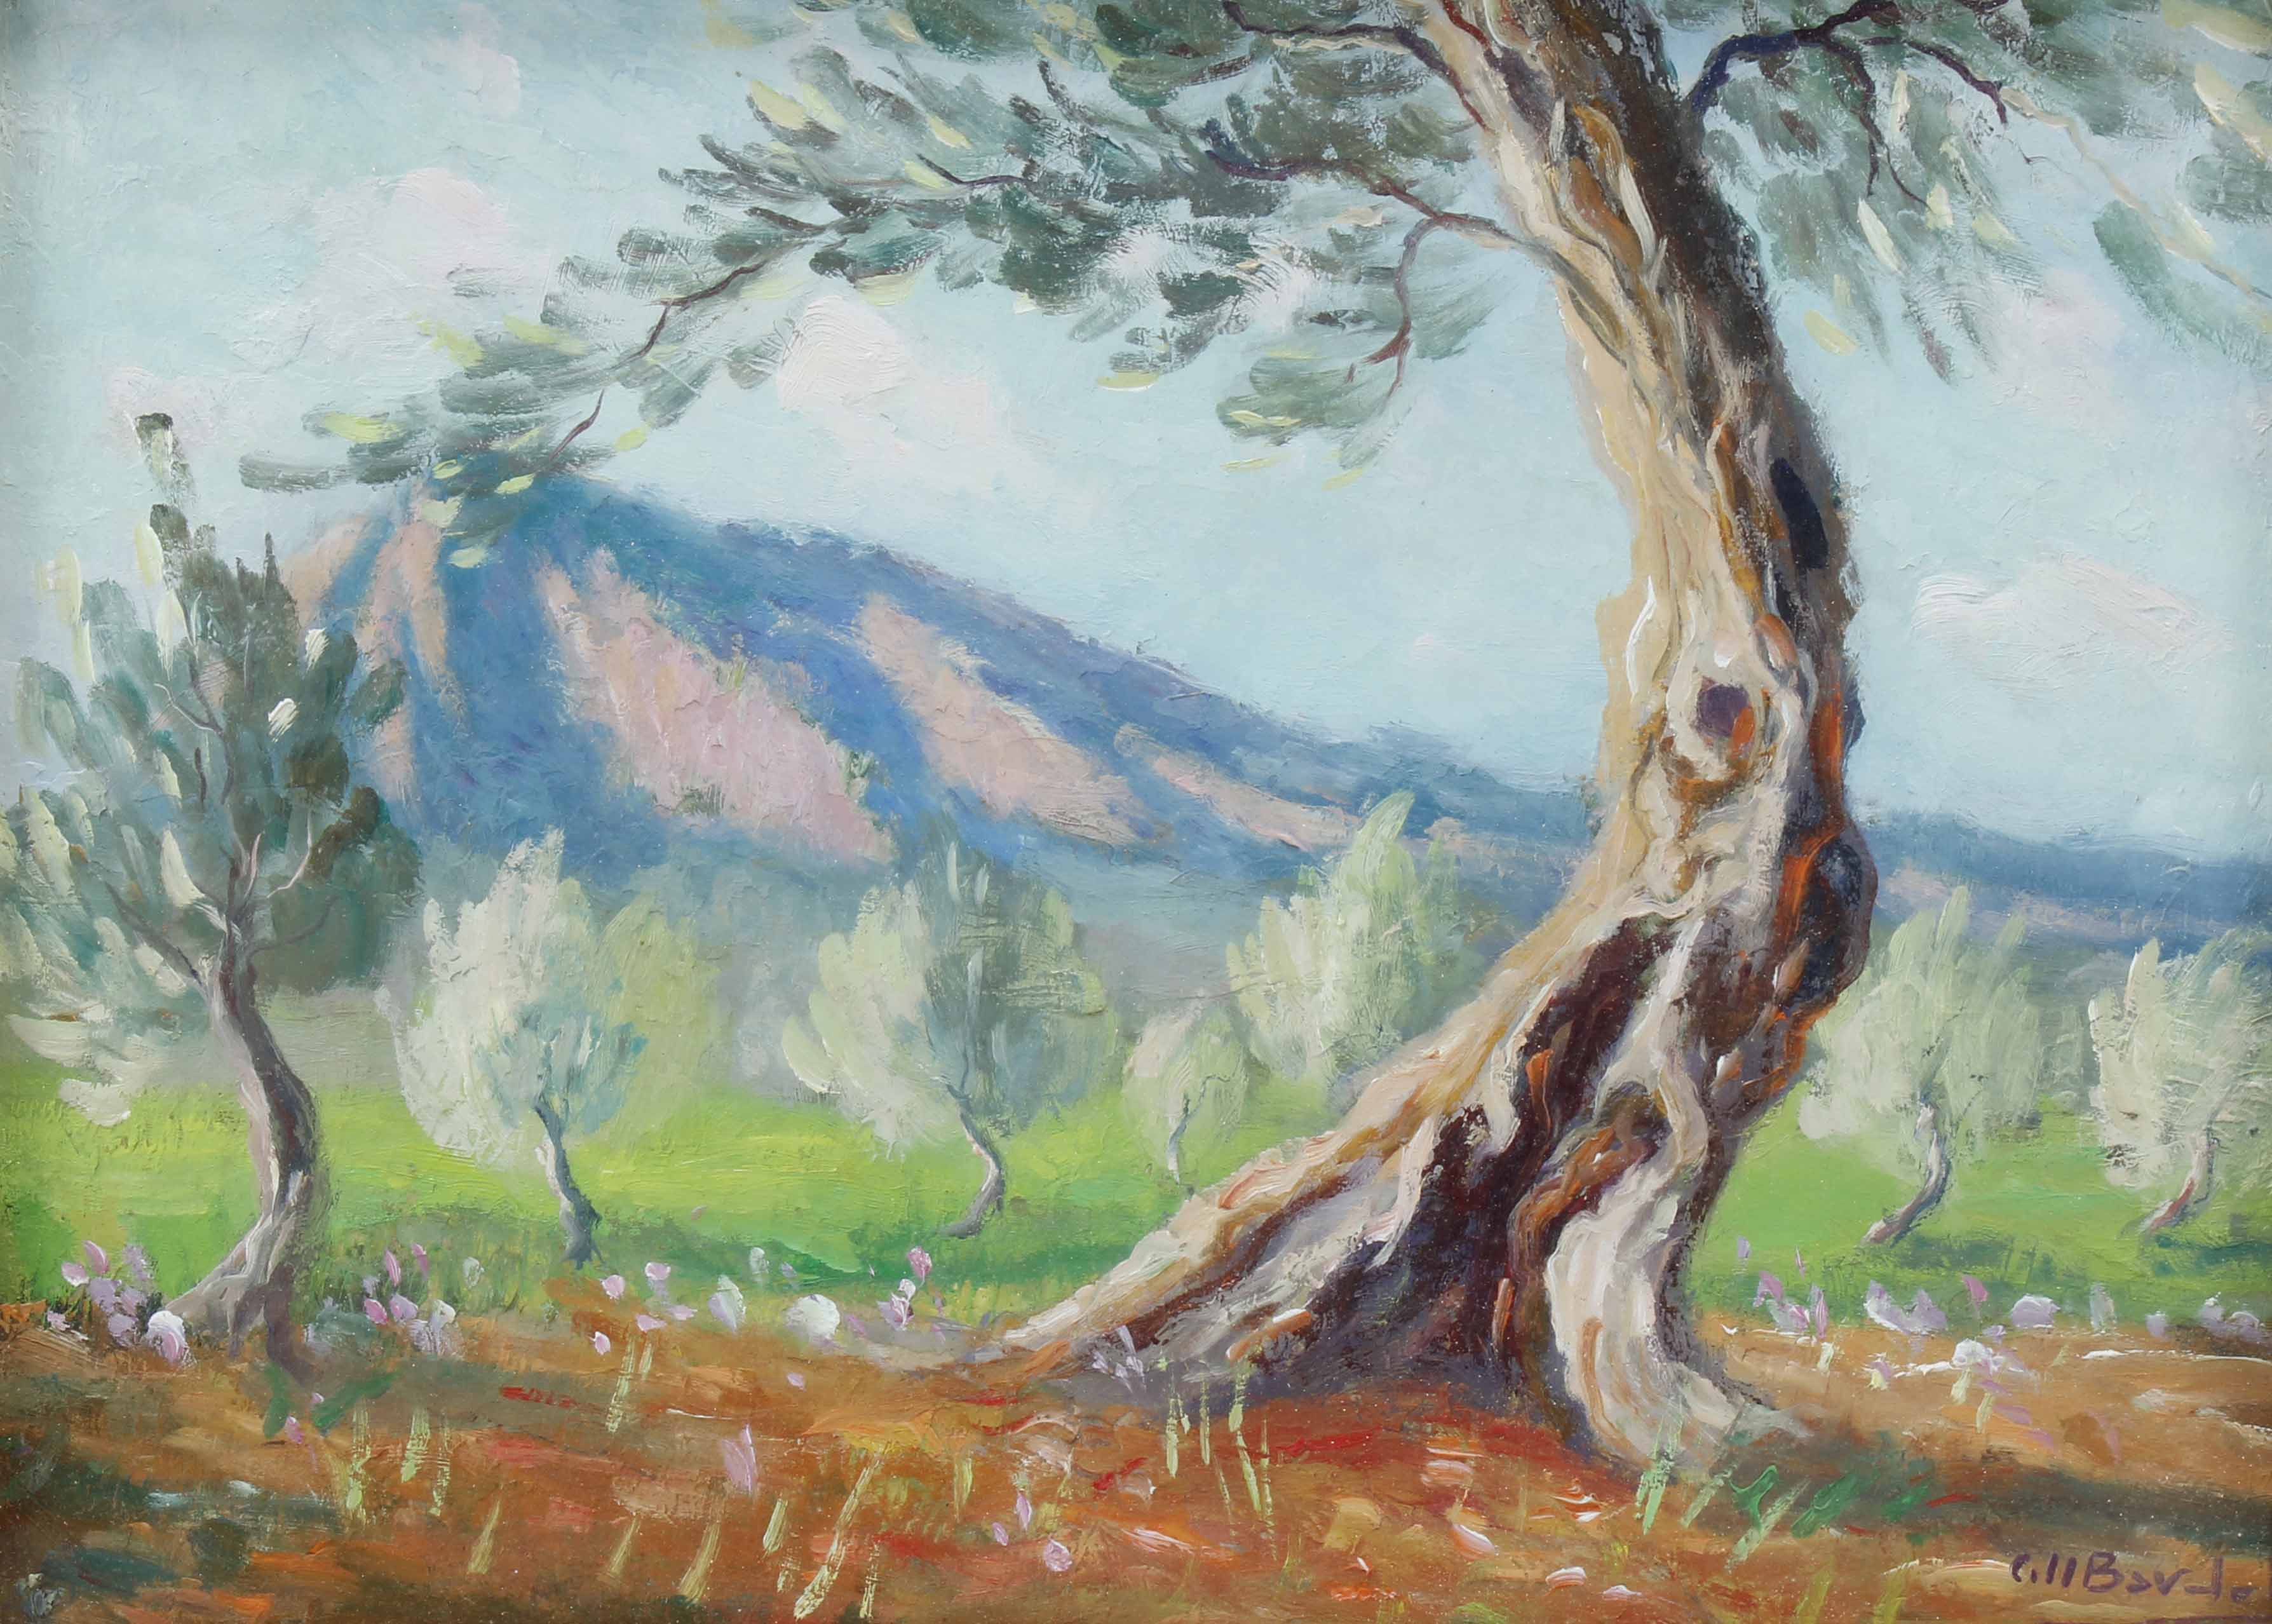 JOSEP COLL BARDOLET (1912-2007). "LANDSCAPE WITH OLIVE TREE